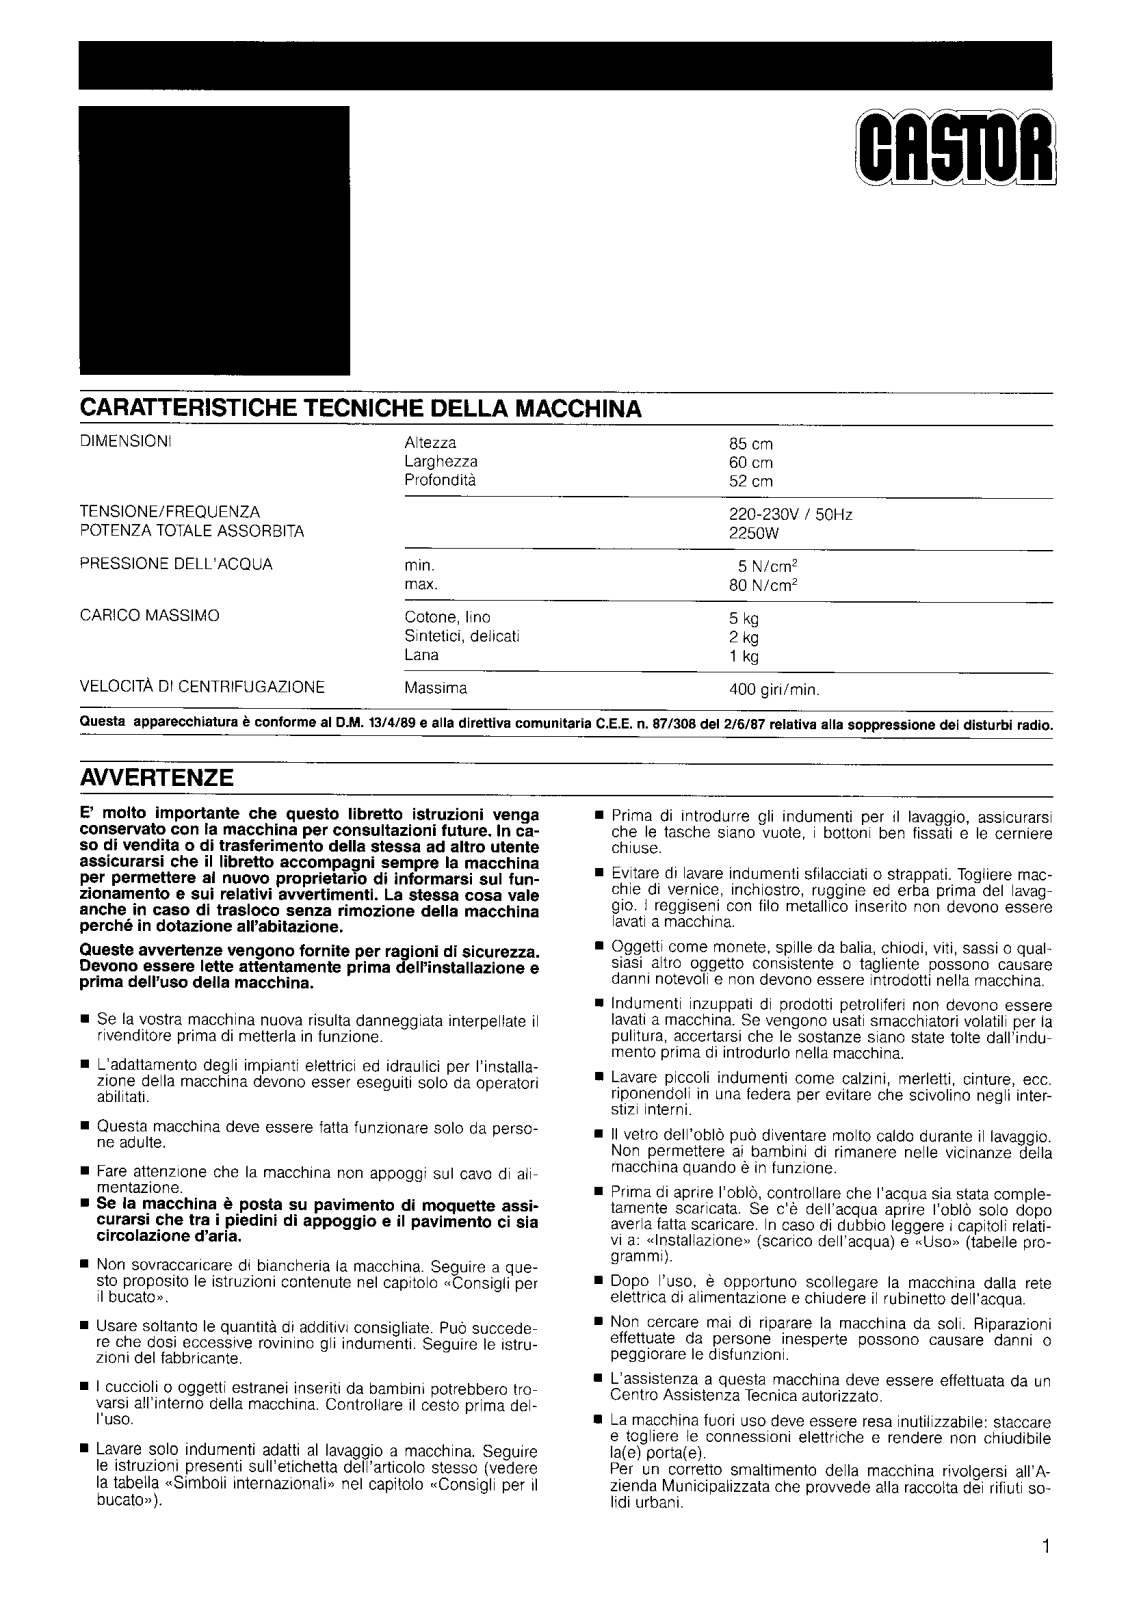 Castor CC450 Instructions Manual